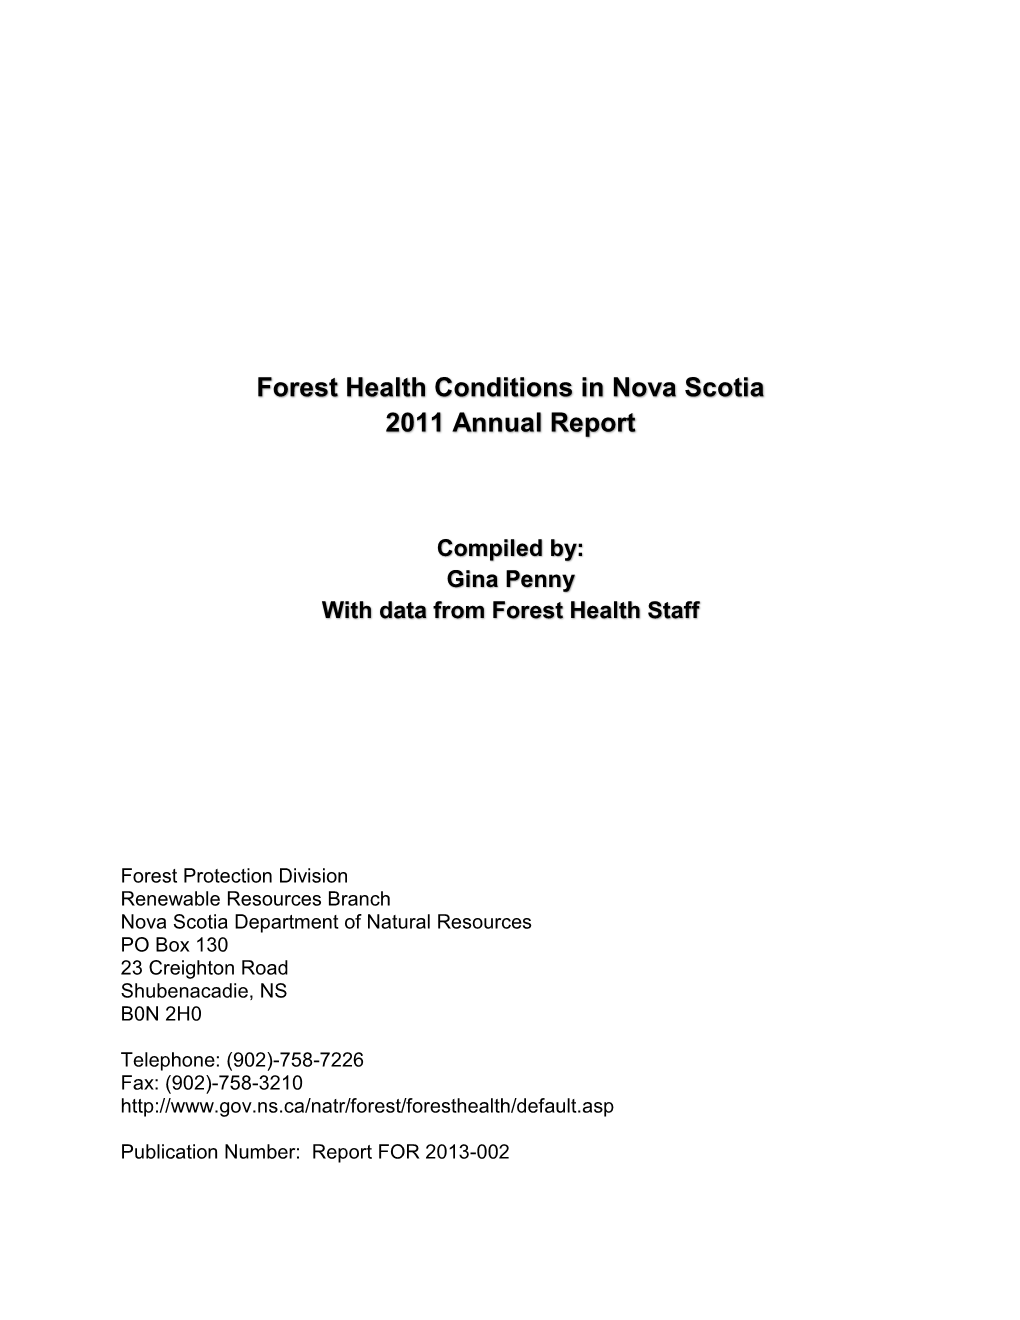 Status of Forest Pests in Nova Scotia